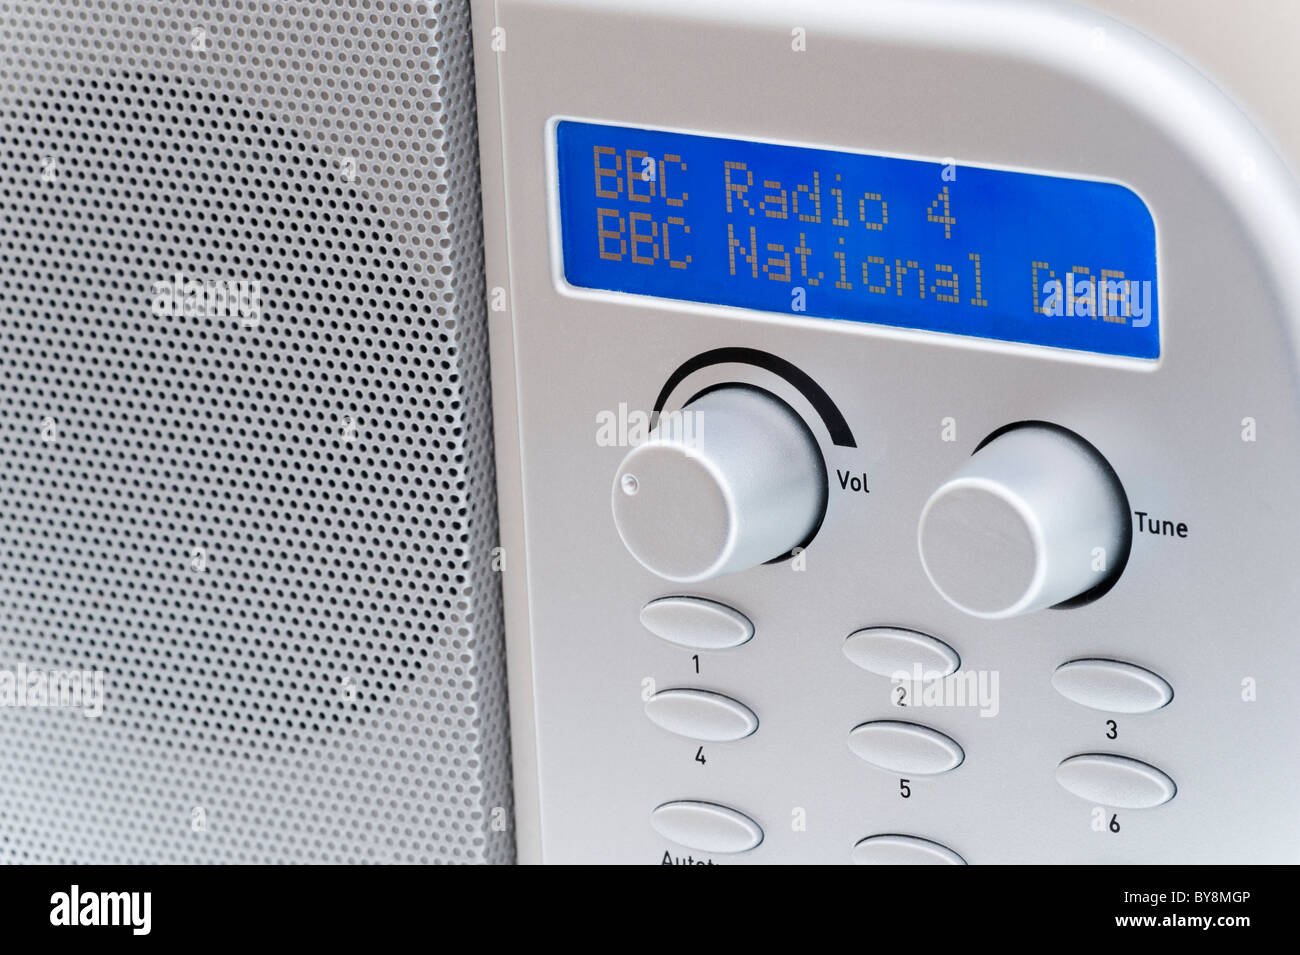 DAB Radio showing Radio 4 on the LED Display Stock Photo - Alamy